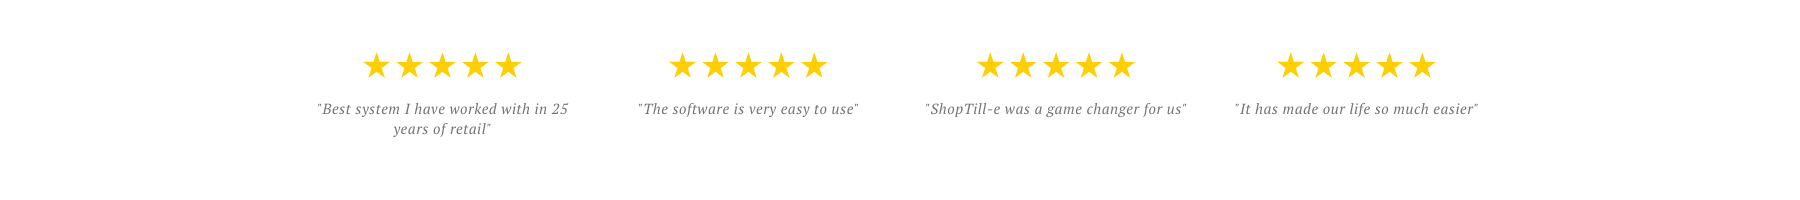 shoptill-e 5 star reviews